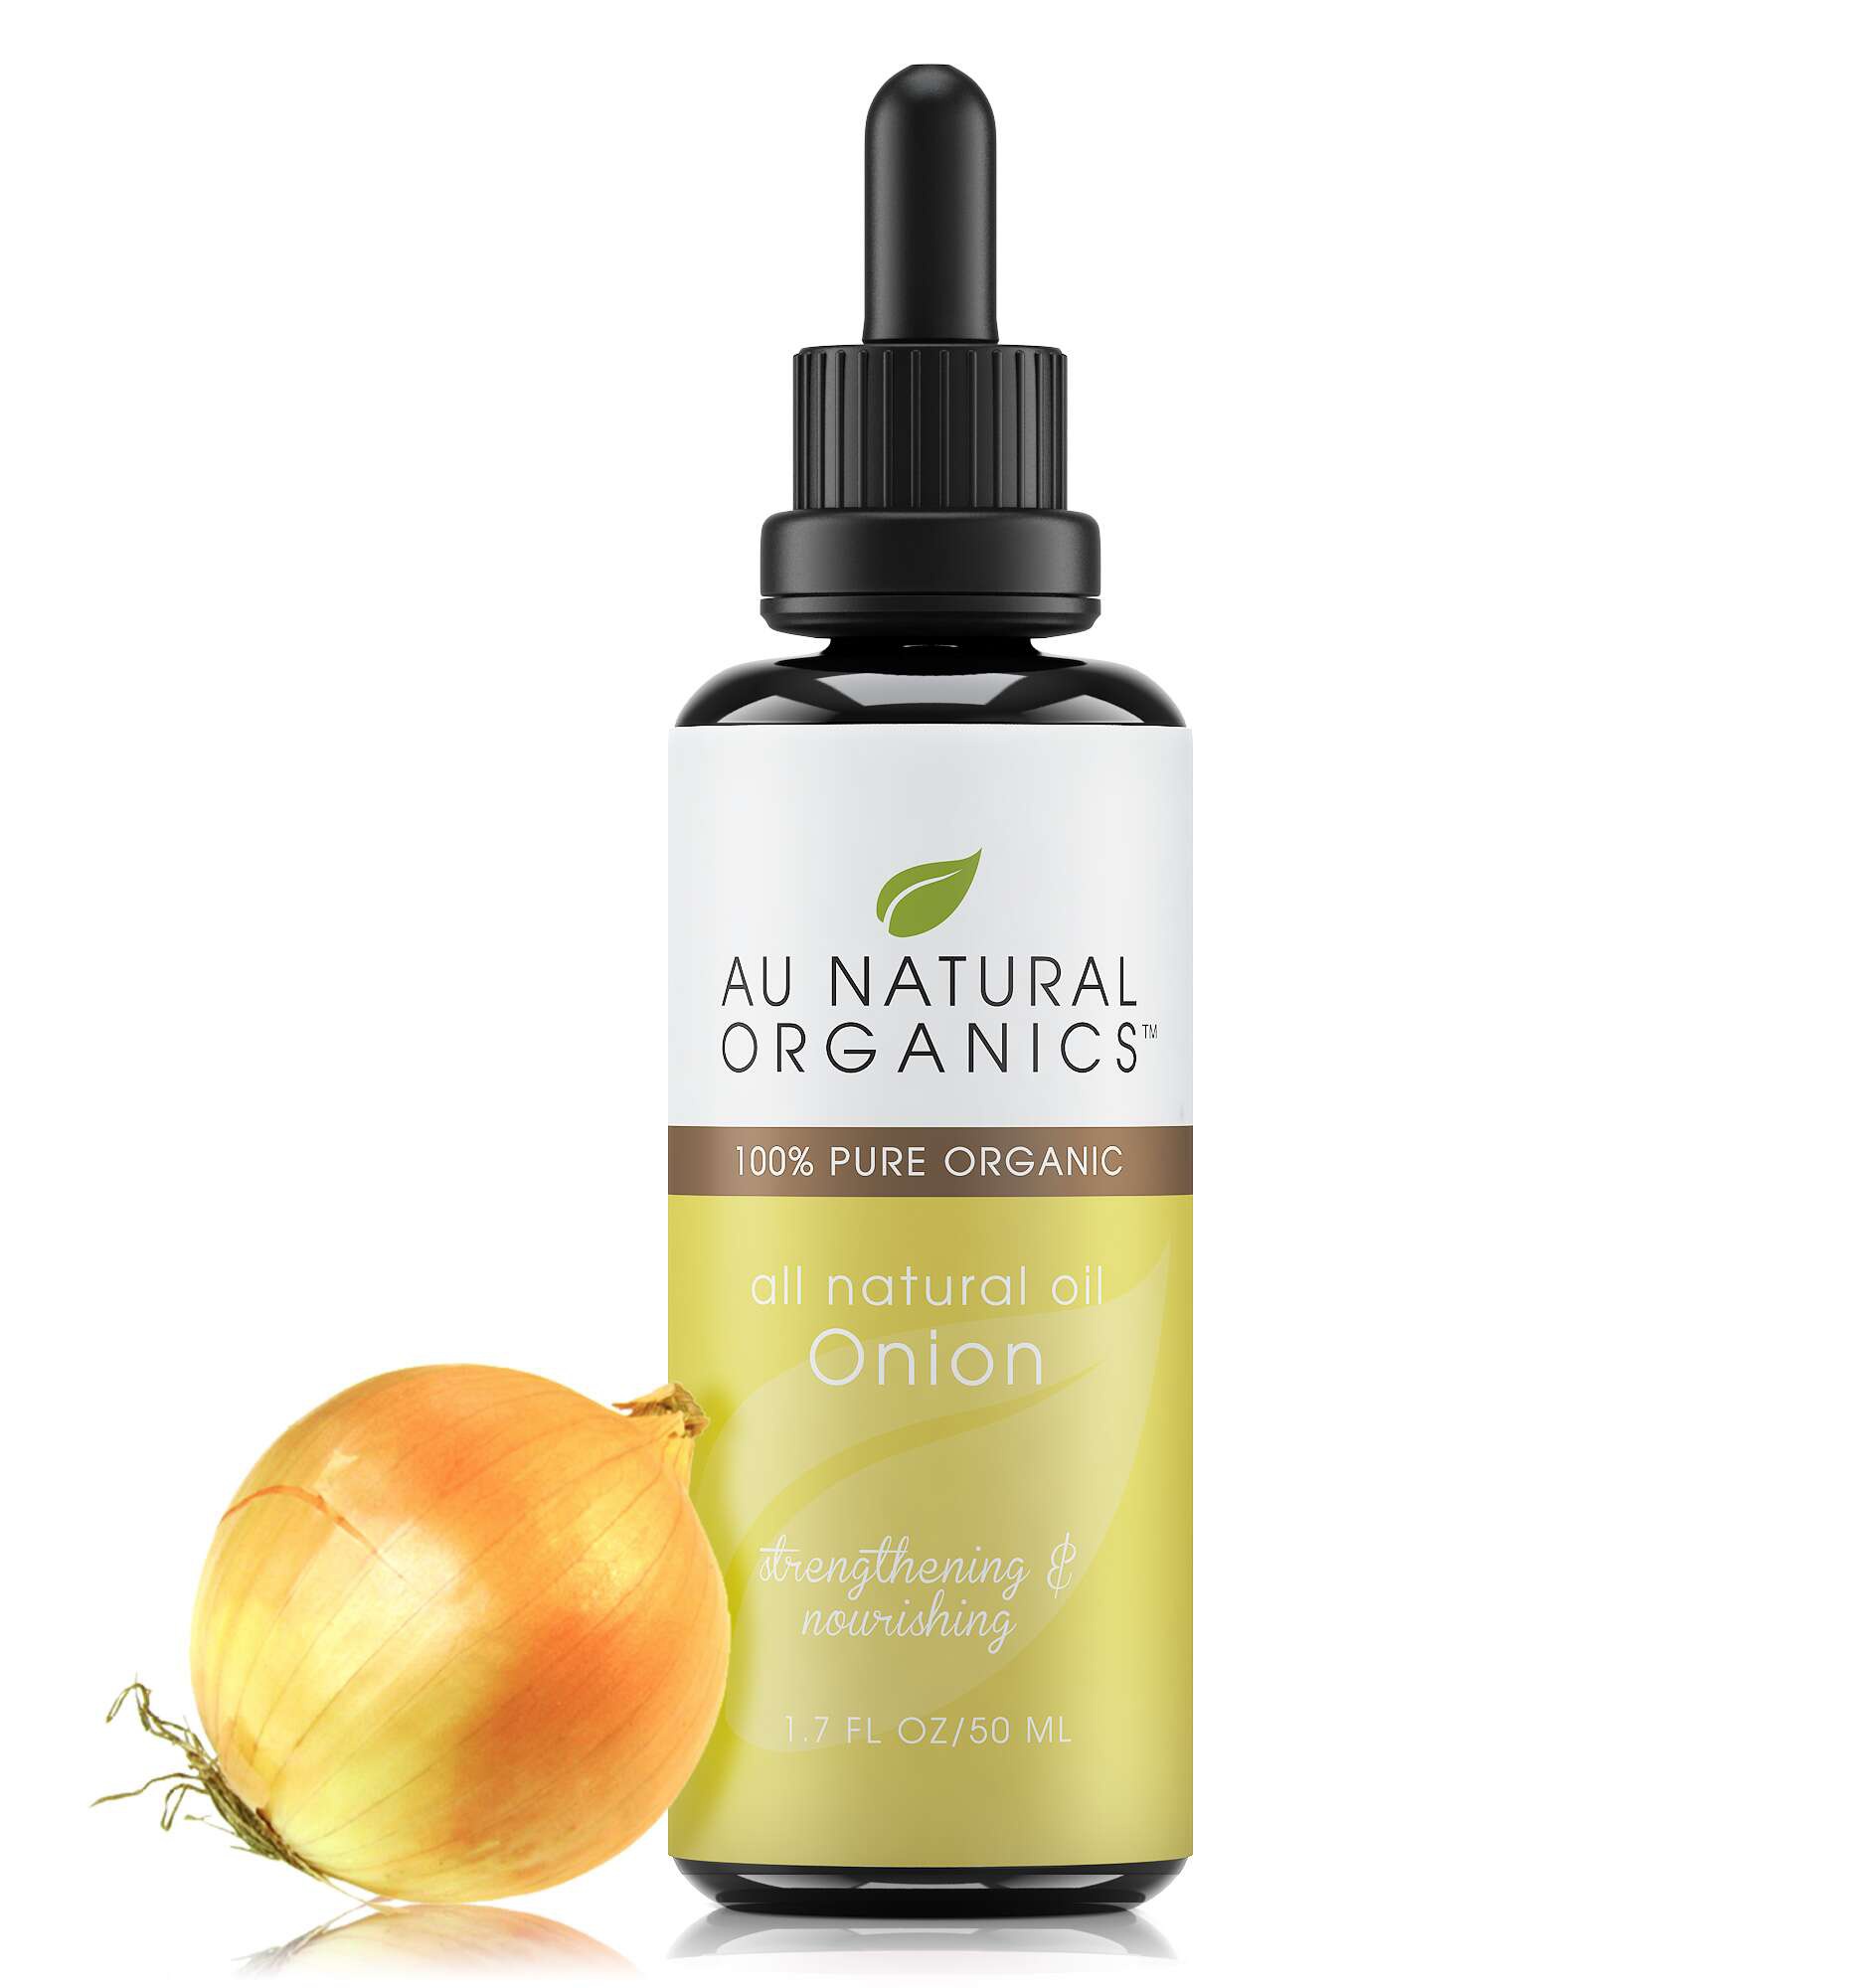 Au Natural Organics Onion Oil